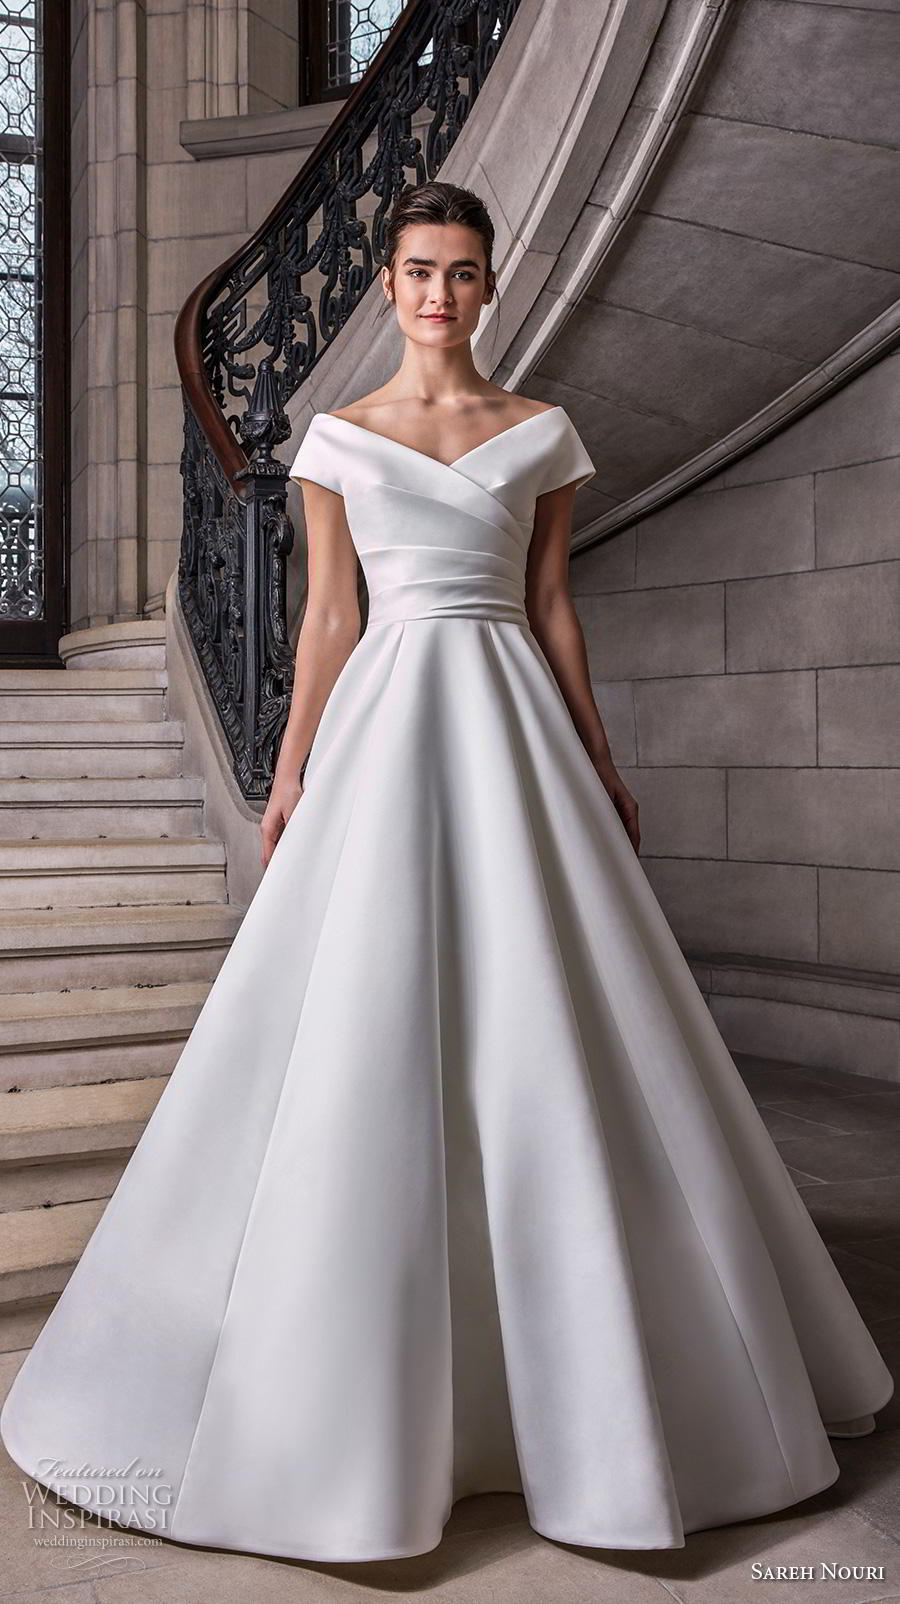 Wrap Over Dresses For Weddings Online ...